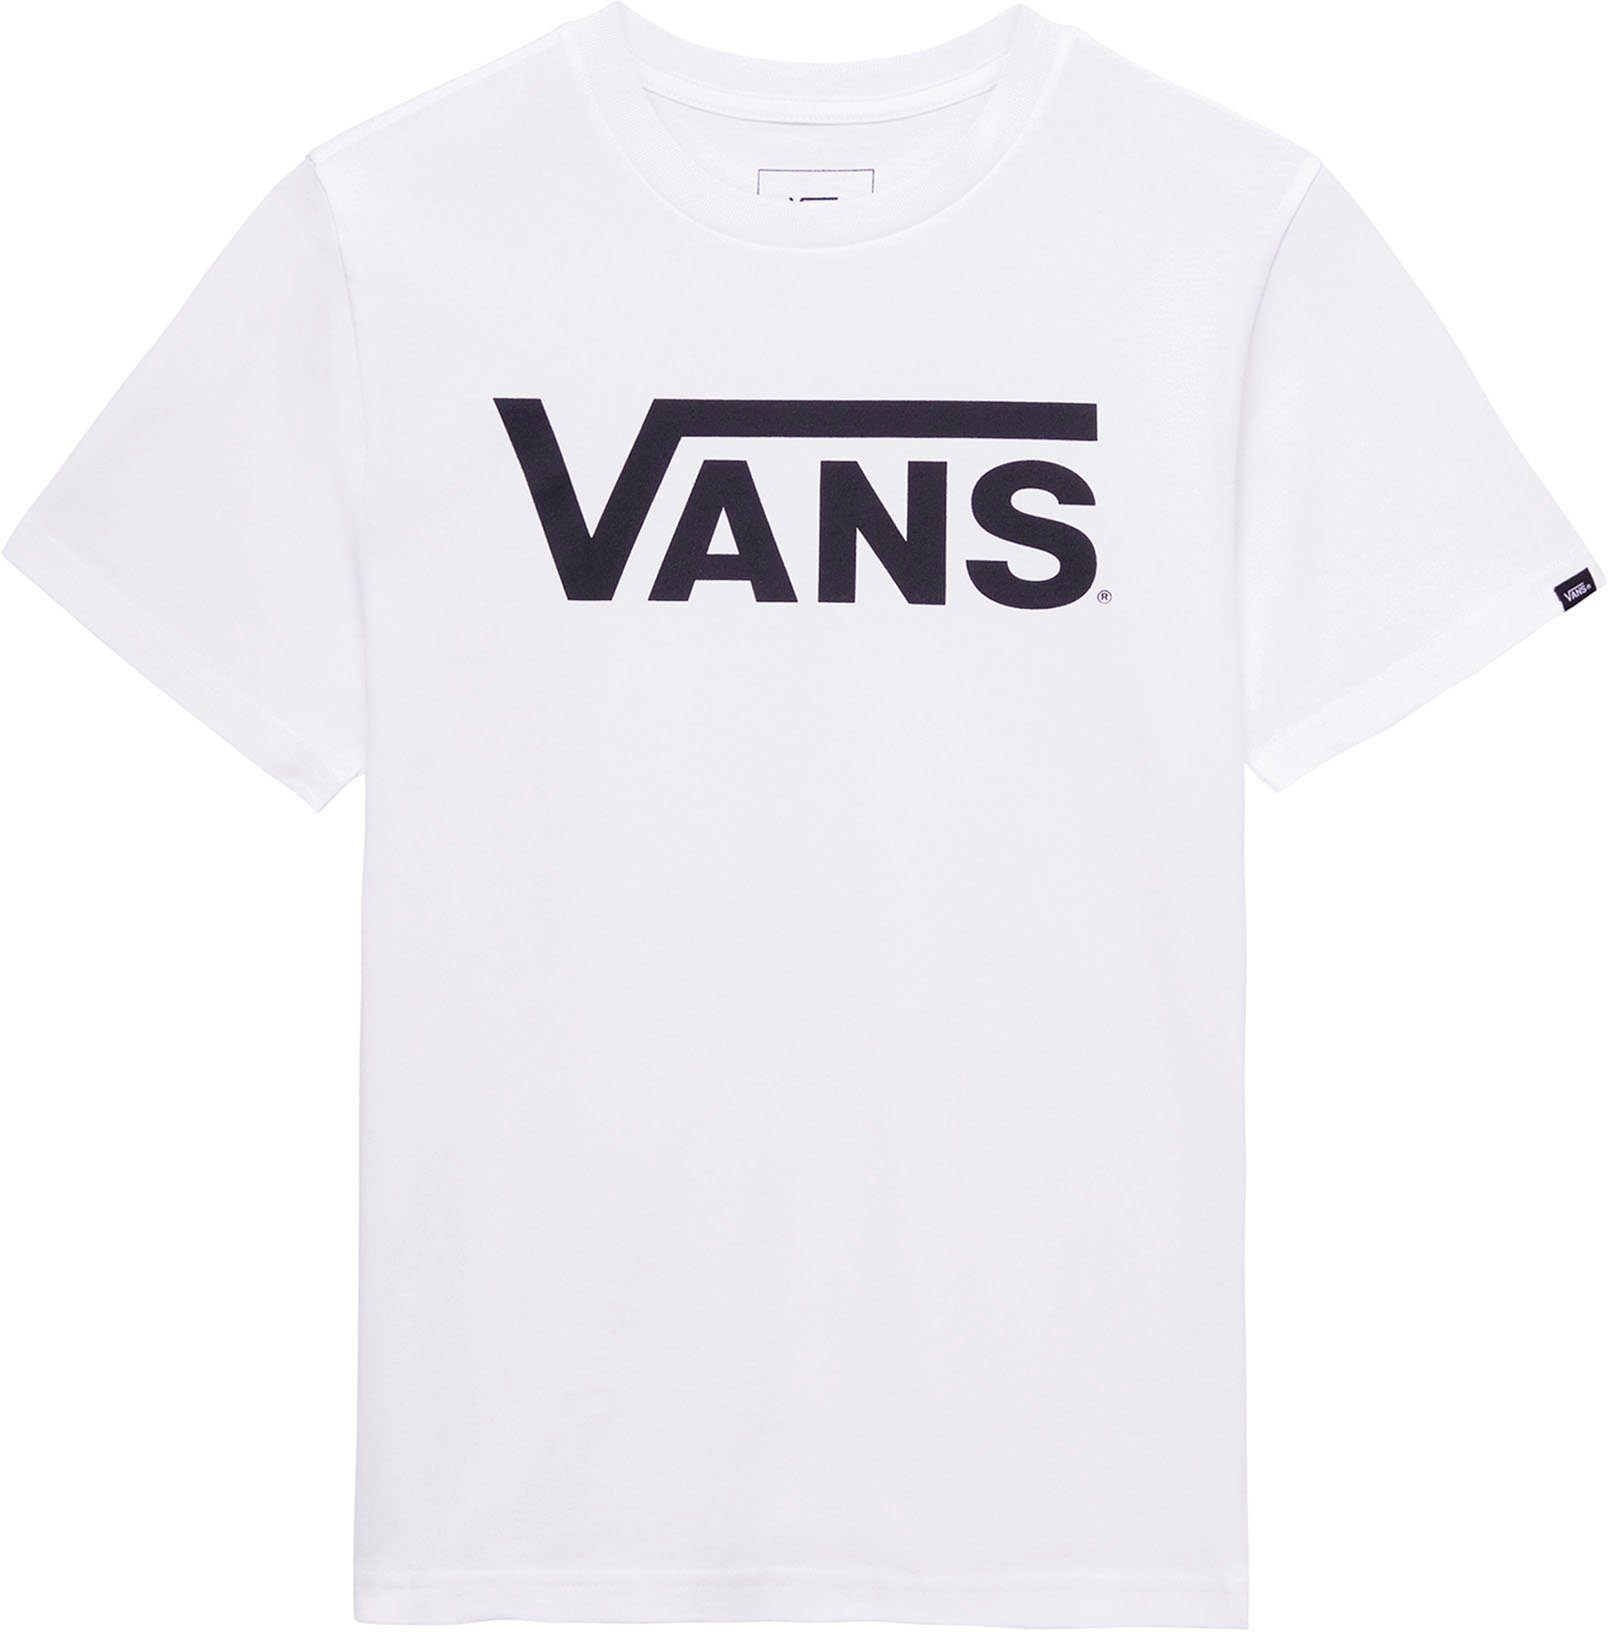 Vans T-Shirt VANS CLASSIC BOYS weiß